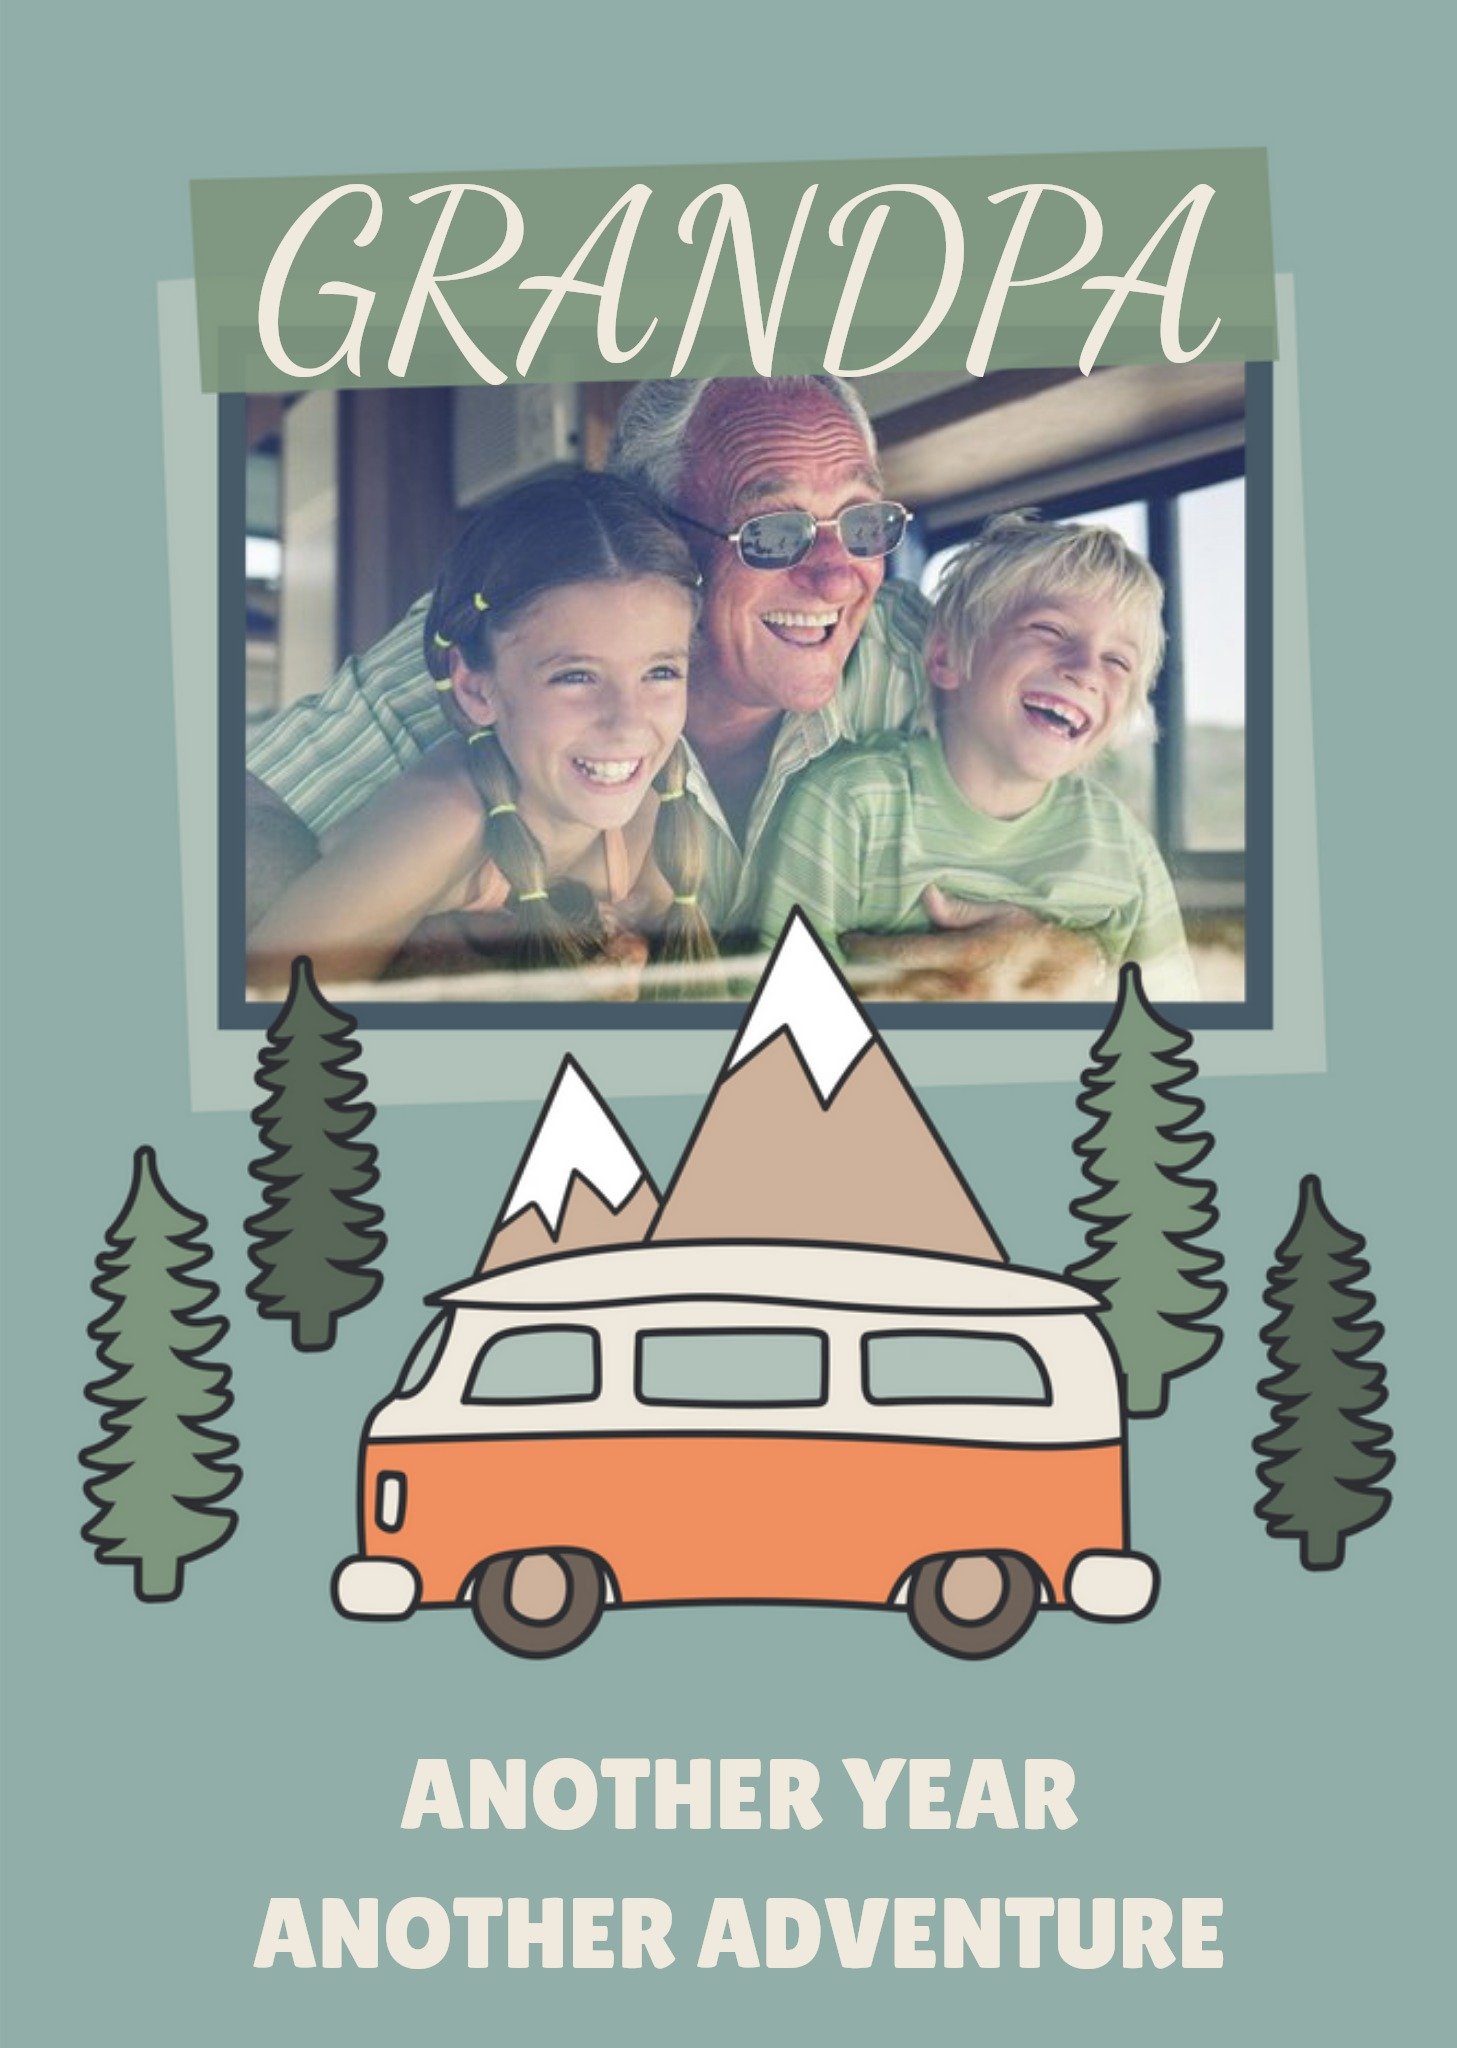 Moonpig Outdoor Adventure Camper Van Photo Upload Birthday Grandpa Card, Large